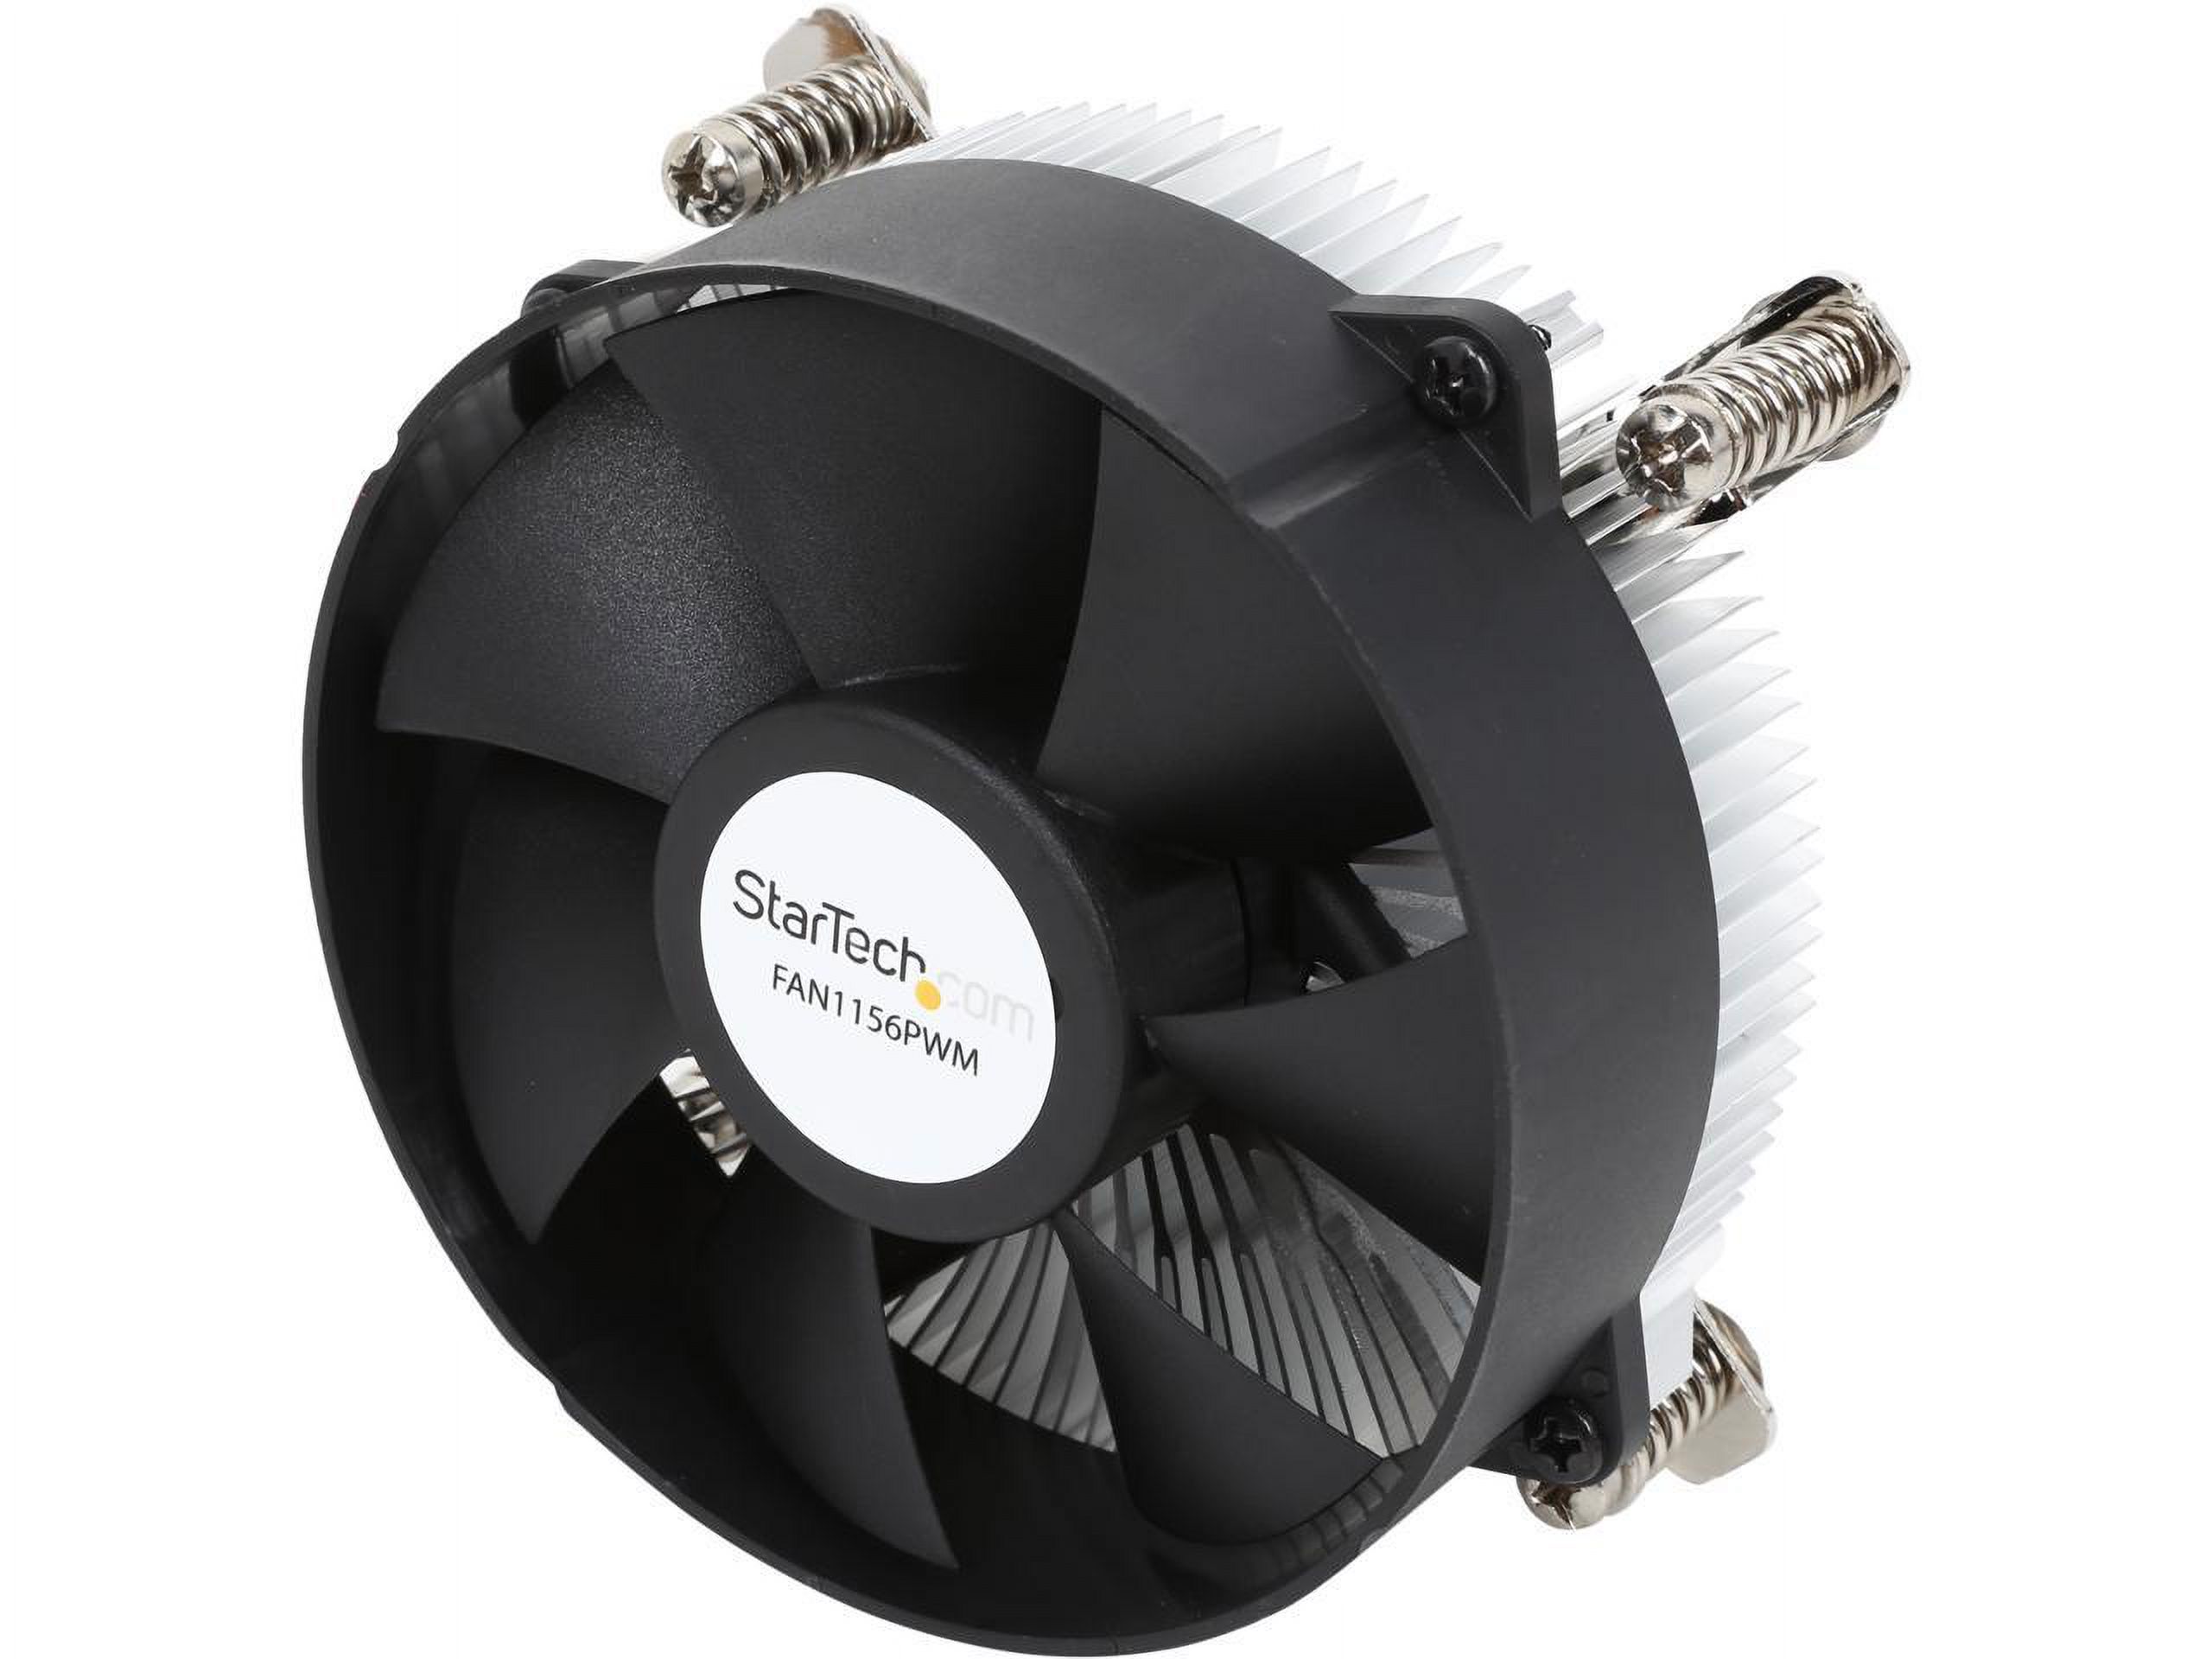 StarTech 95mm CPU Cooler Fan with Heatsink - image 1 of 5